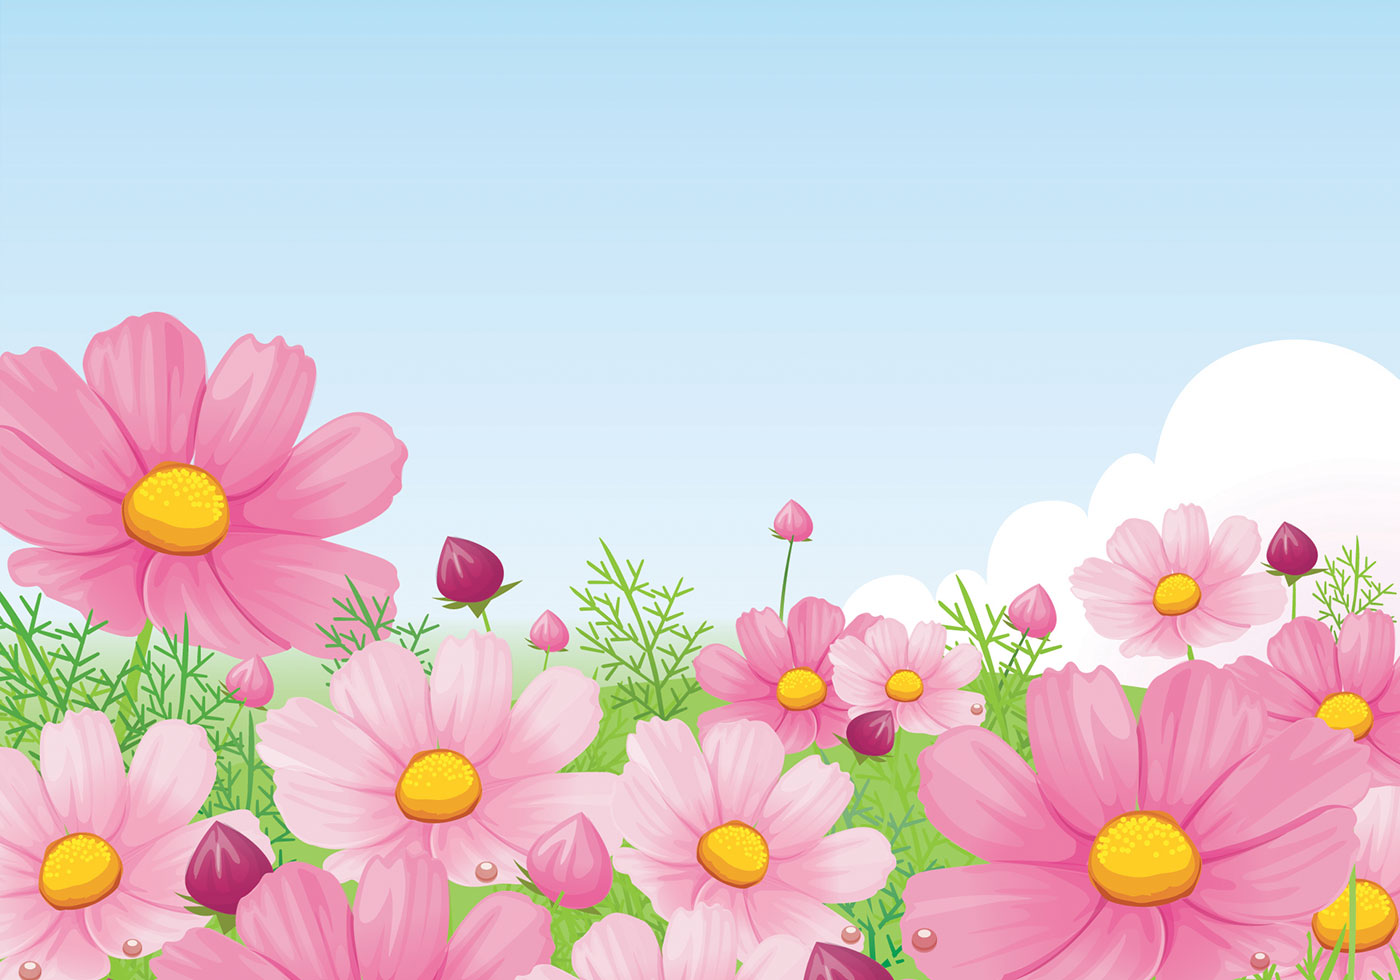 Beautiful Pink Daisy Wallpaper Vector - Download Free Vectors, Clipart ...